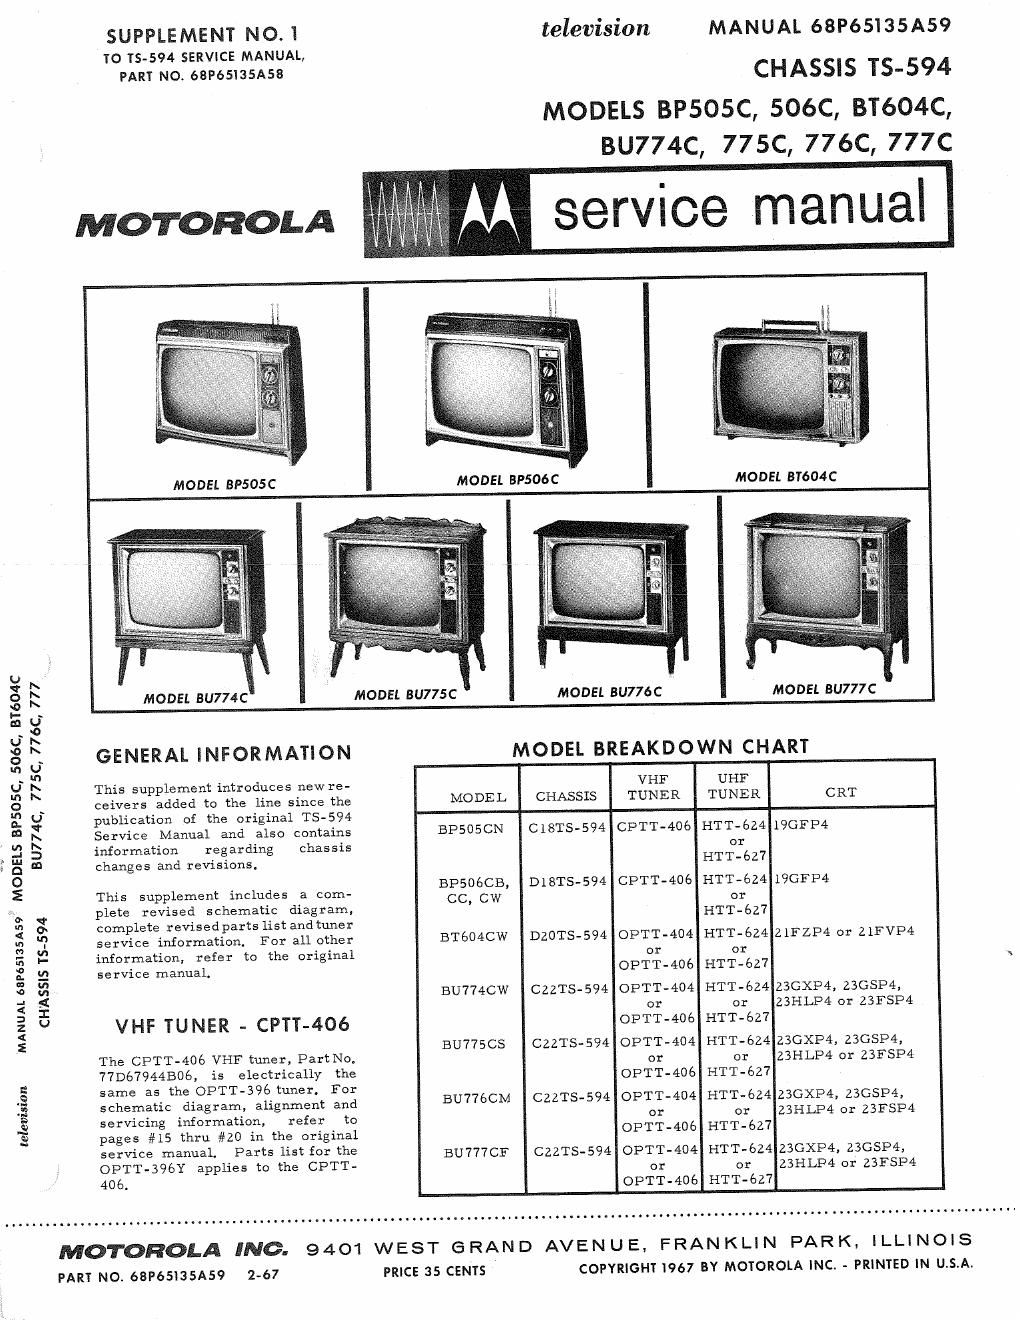 motorola bu 775 c service manual